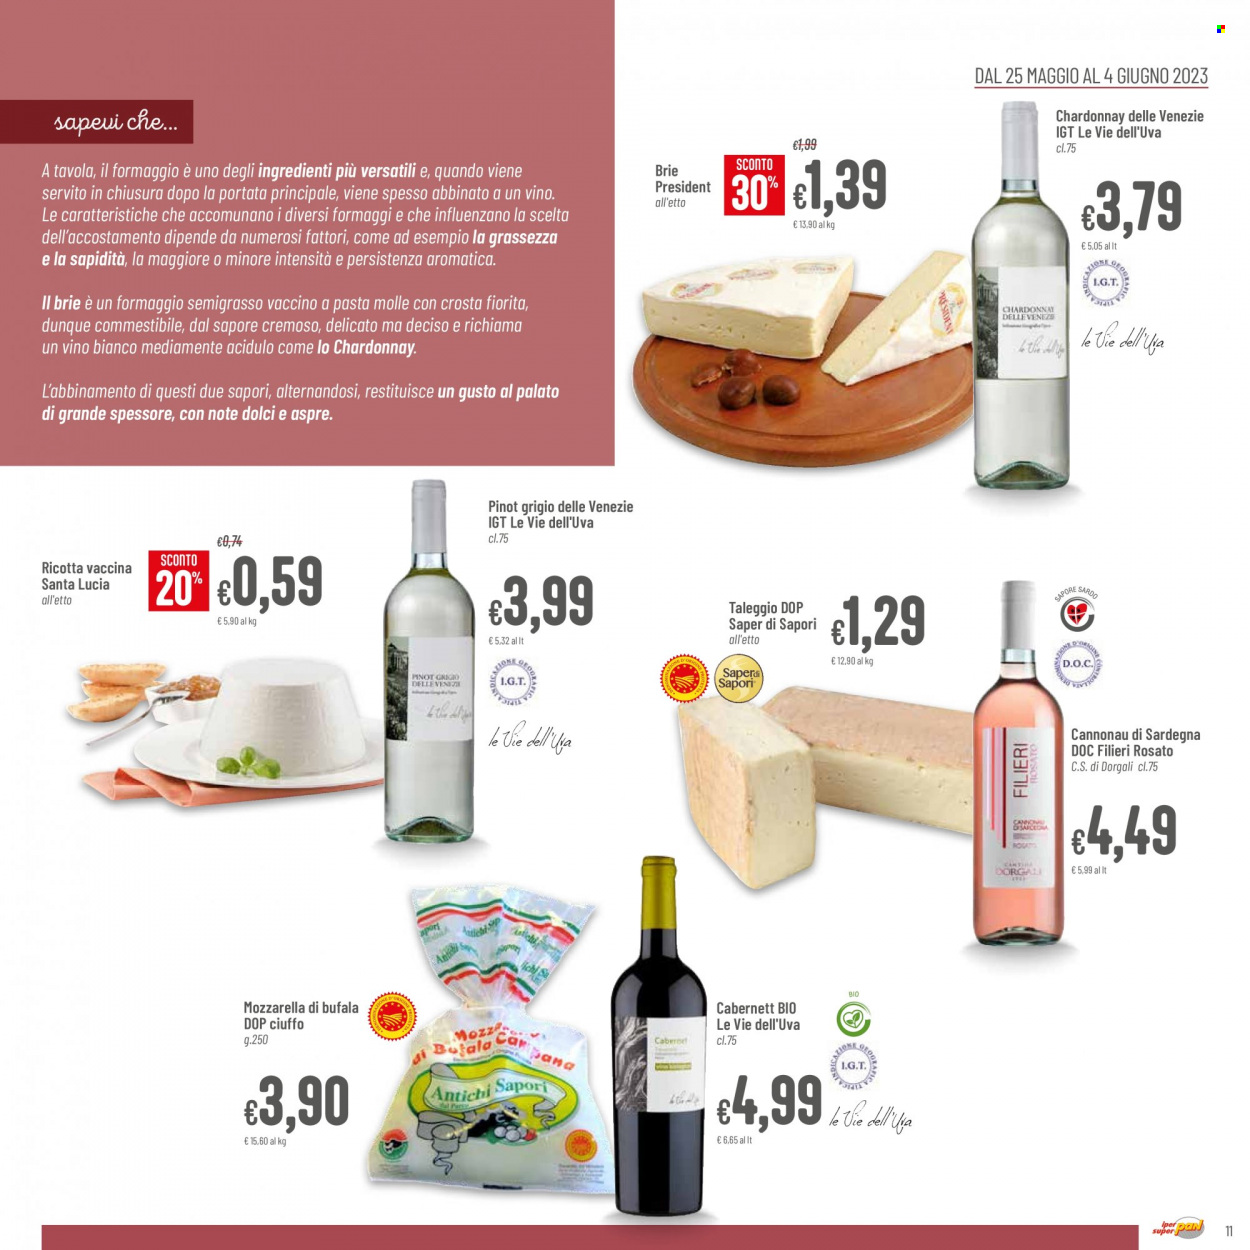 thumbnail - Volantino Pan - 25/5/2023 - 4/6/2023 - Prodotti in offerta - taleggio, mozzarella di bufala, Président, vino bianco, Chardonnay, vino, Cannonau, Pinot Grigio. Pagina 11.